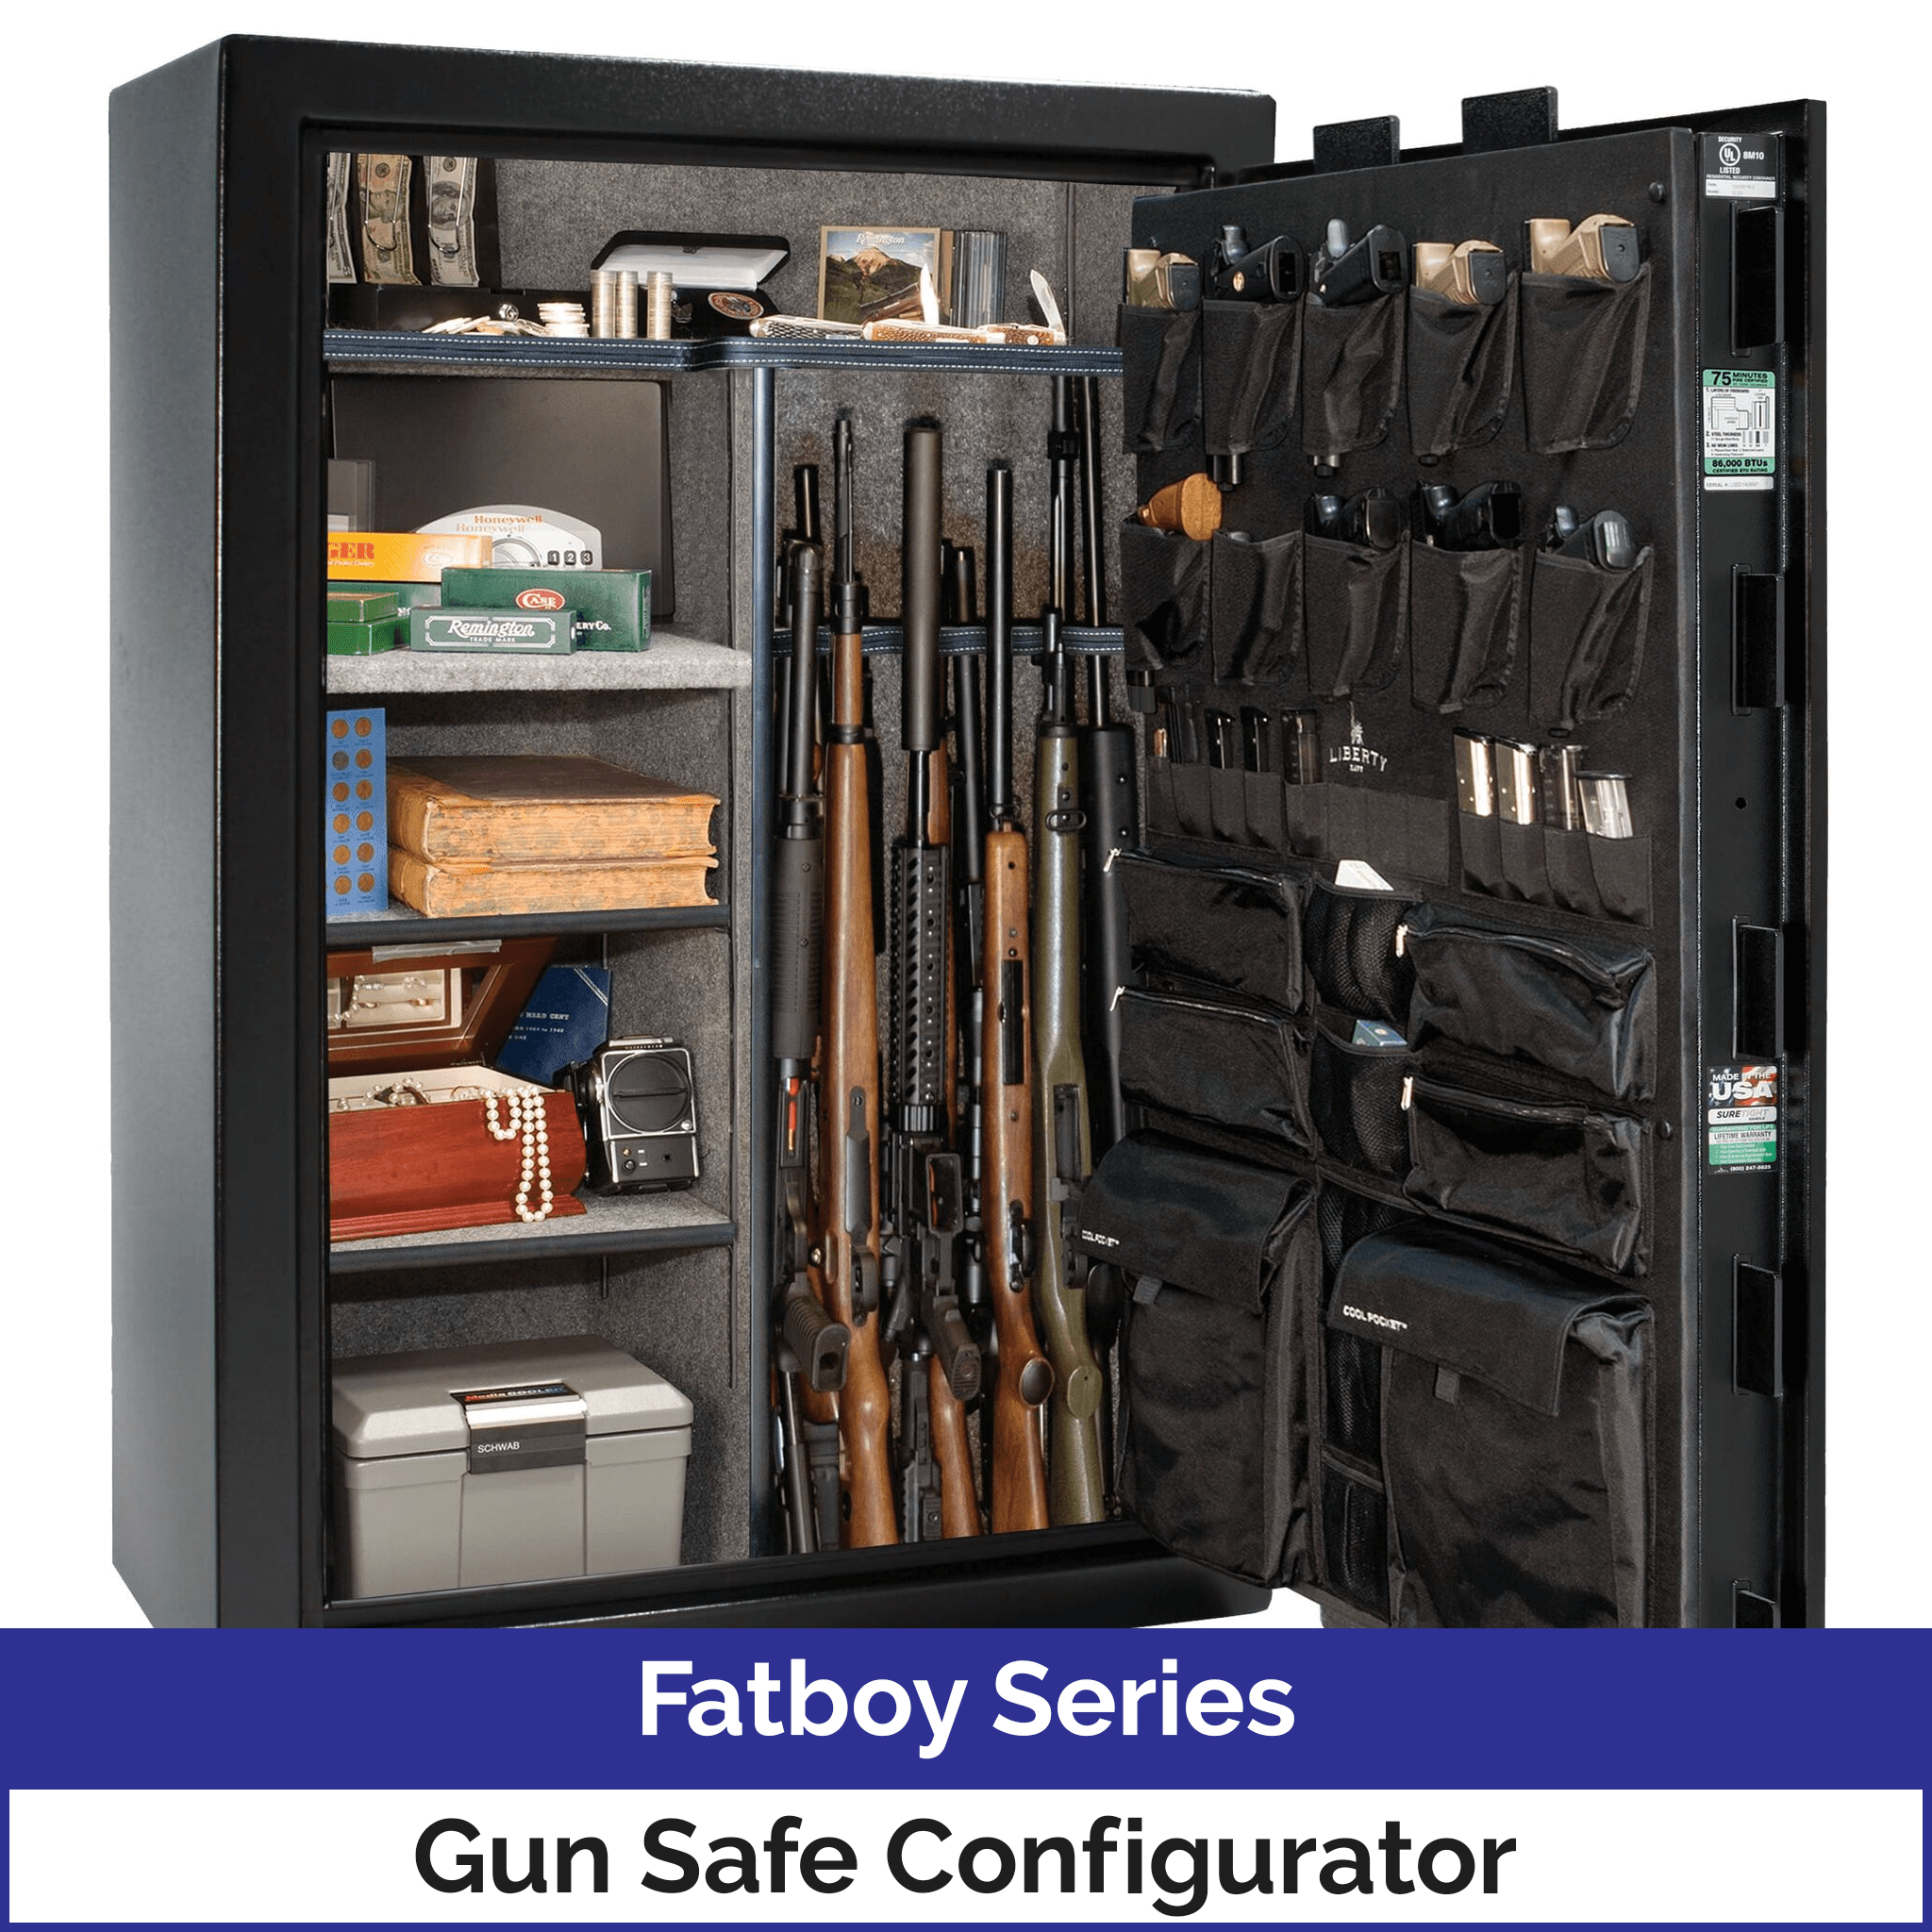 Liberty Fatboy Series Gun Safe Configurator, photo 2